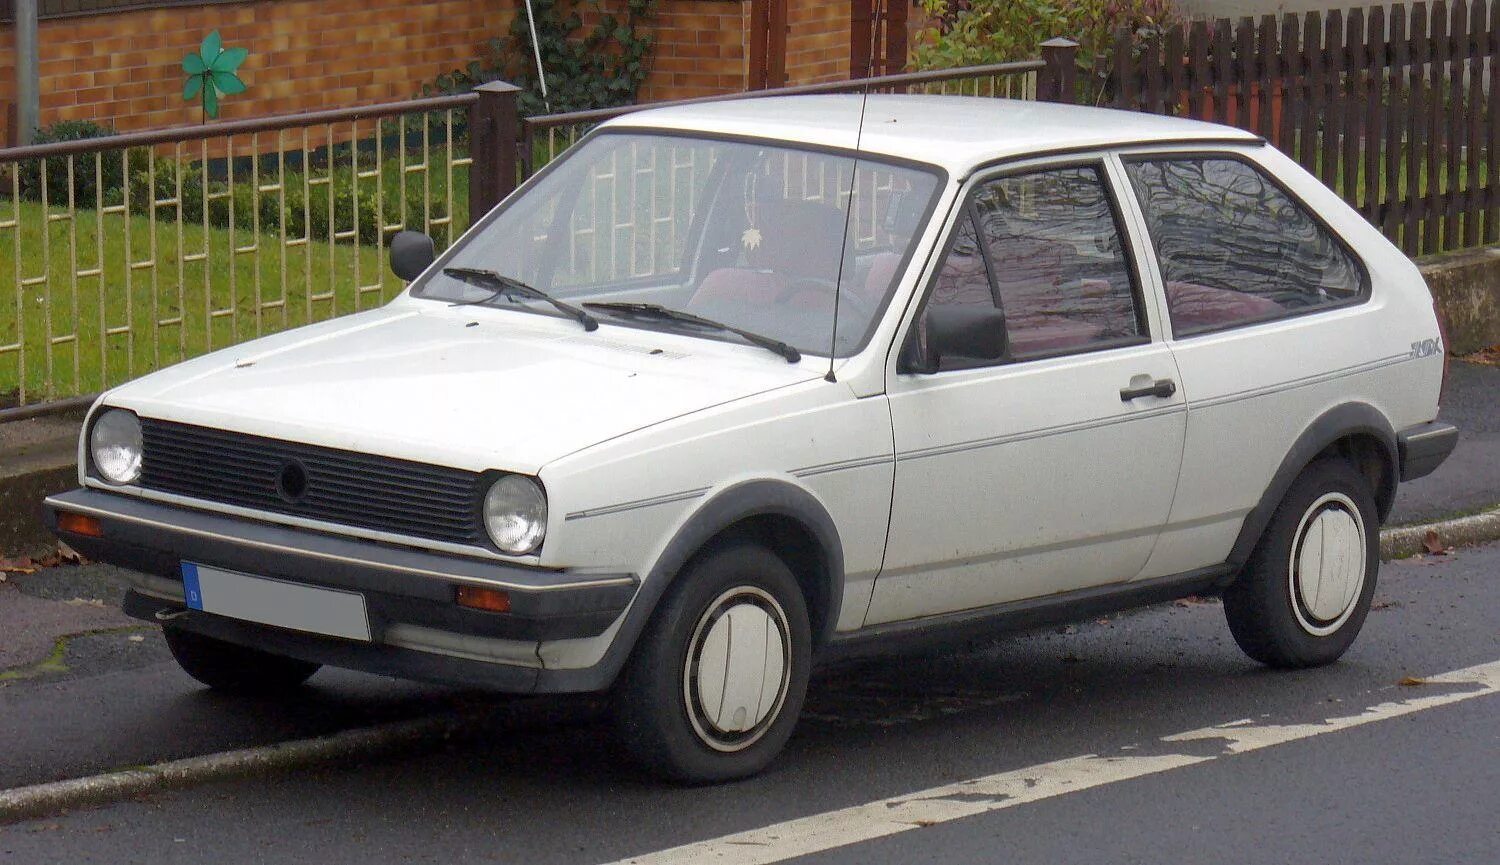 Vw polo 2. Volkswagen Polo 2 поколения. Фольксваген поло 1980. Фольксваген поло седан 2 поколение. VW Polo 1980.